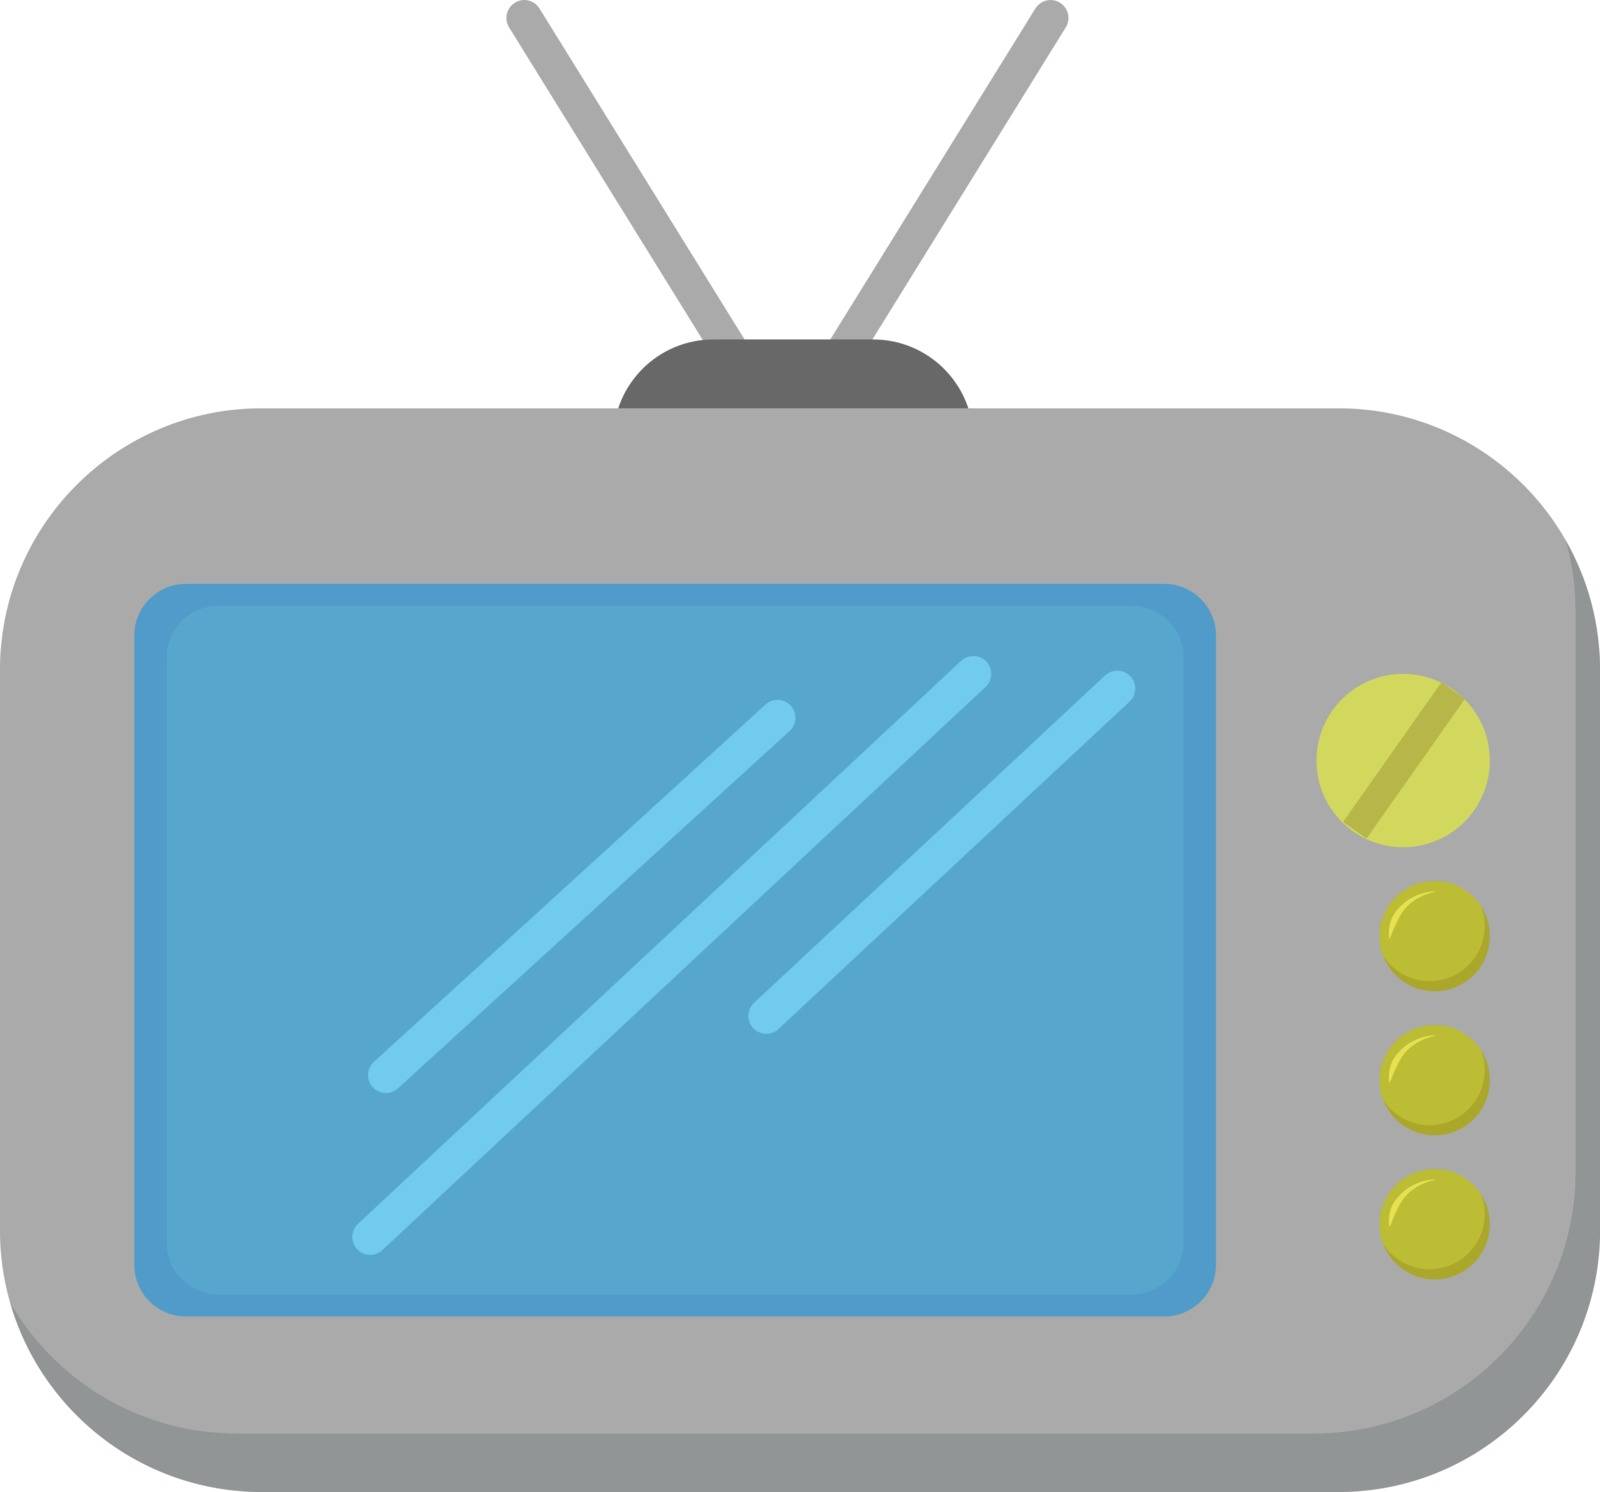 Retro Tv, illustration, vector on white background.